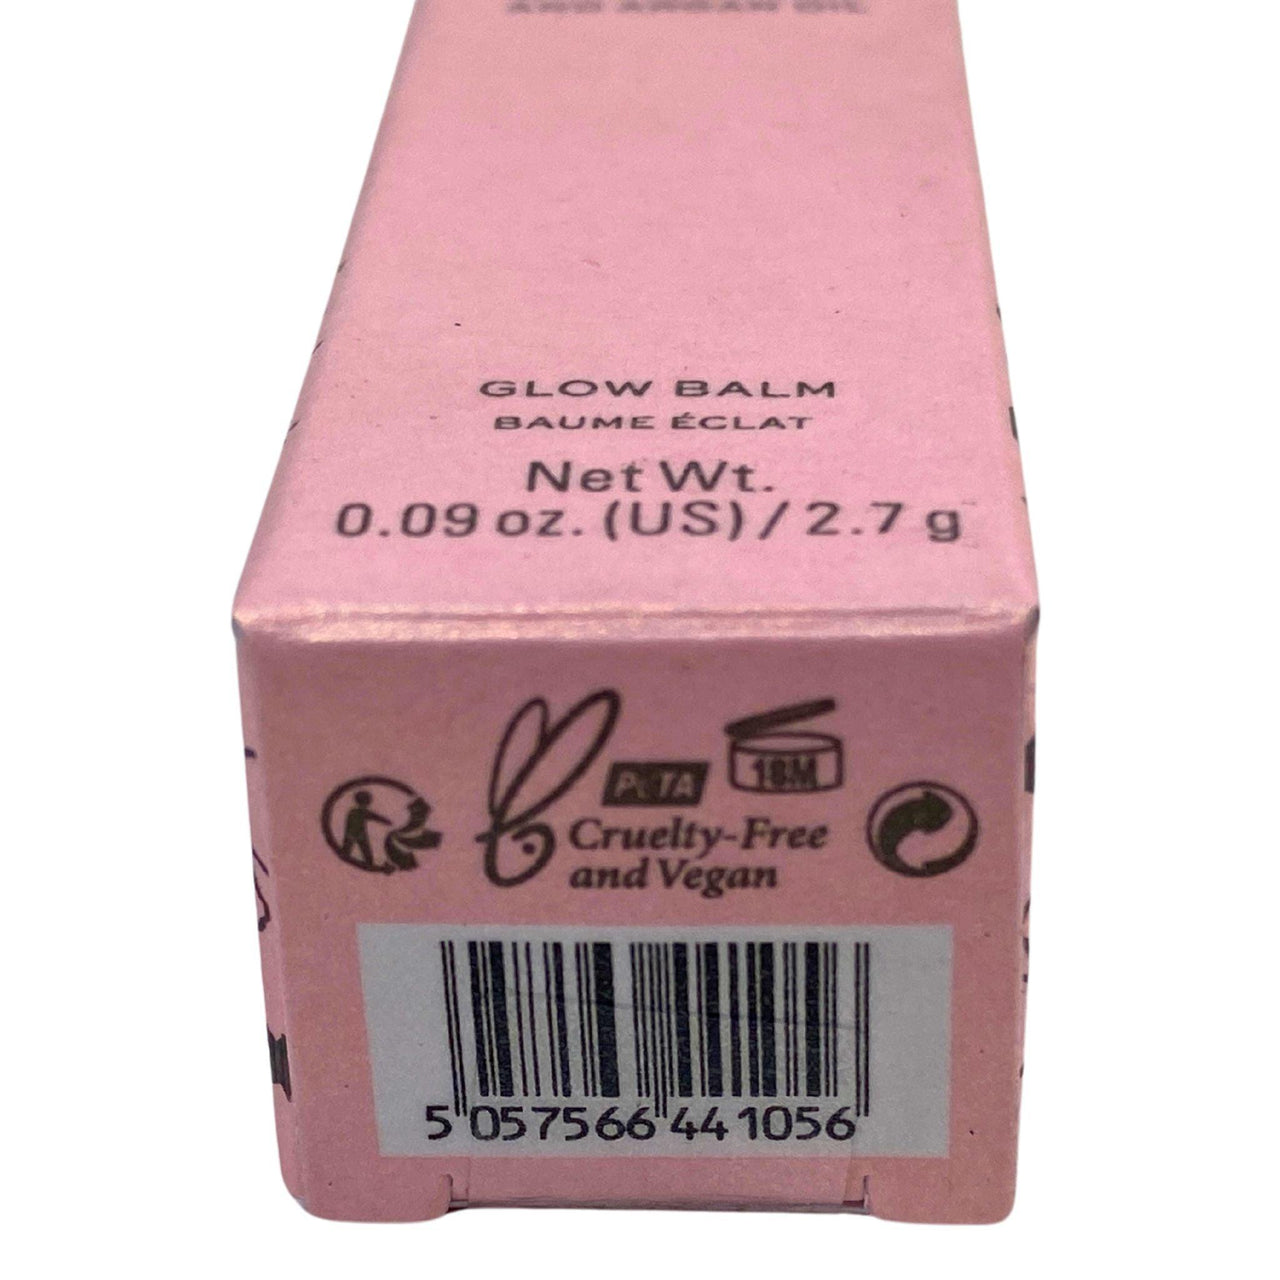 I Heart Revolution Unicorn Heart Glow Balm With Vitamin E & Argan Oil 0.09oz (72 Pcs lot) - Discount Wholesalers Inc